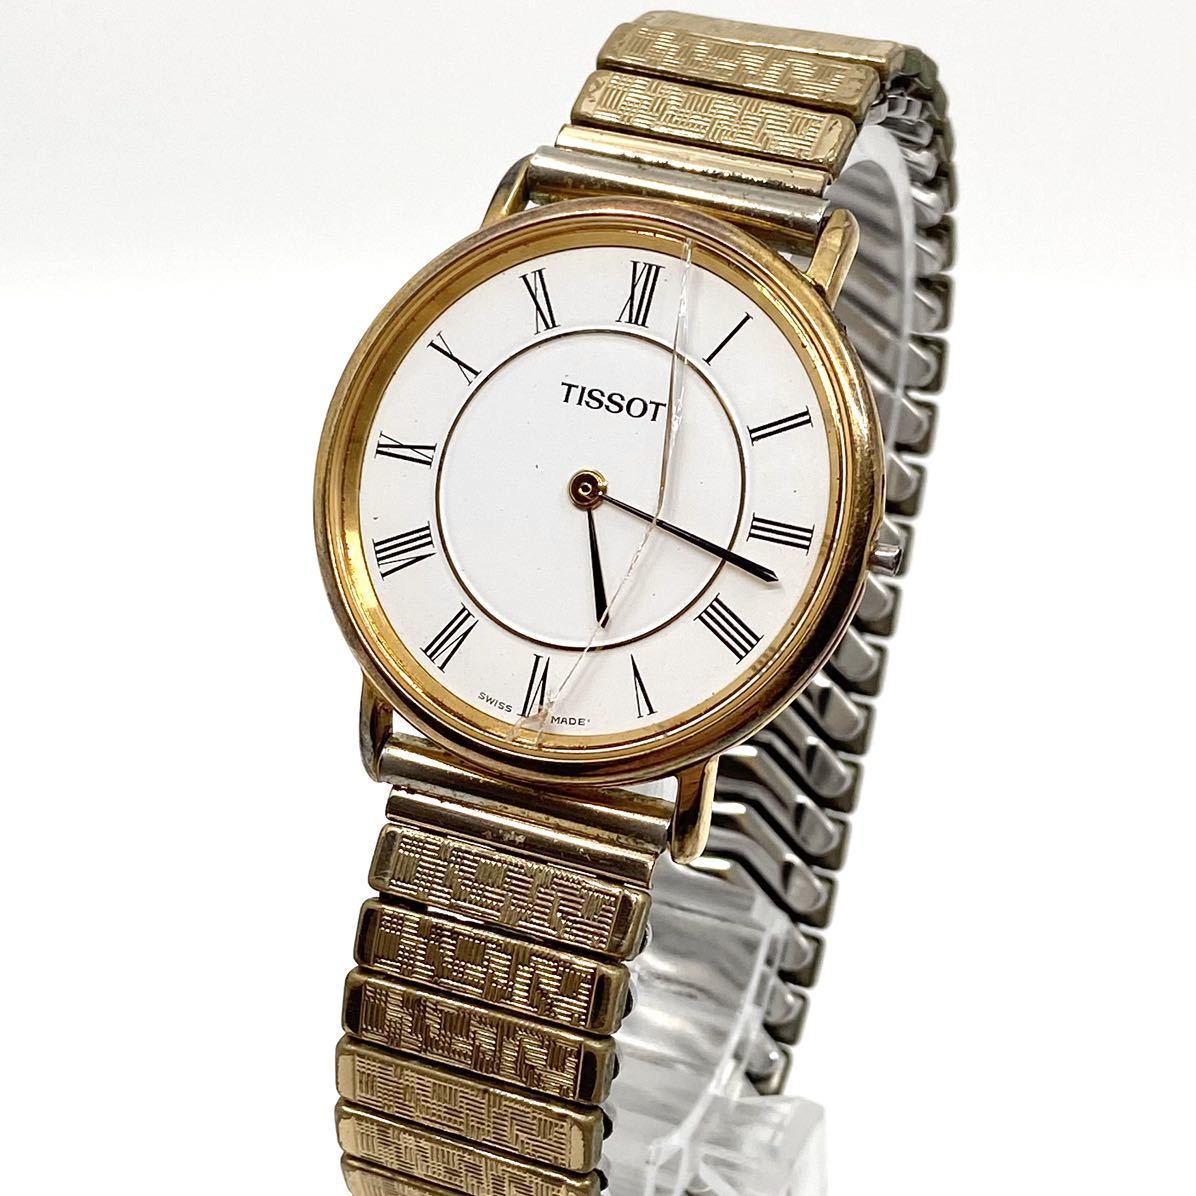 TISSOT 腕時計 蛇腹ベルト ローマンインデックス quartz クォーツ 2針 Swiss スイス製 ホワイト ゴールド 白 金 ティソ D46の画像1